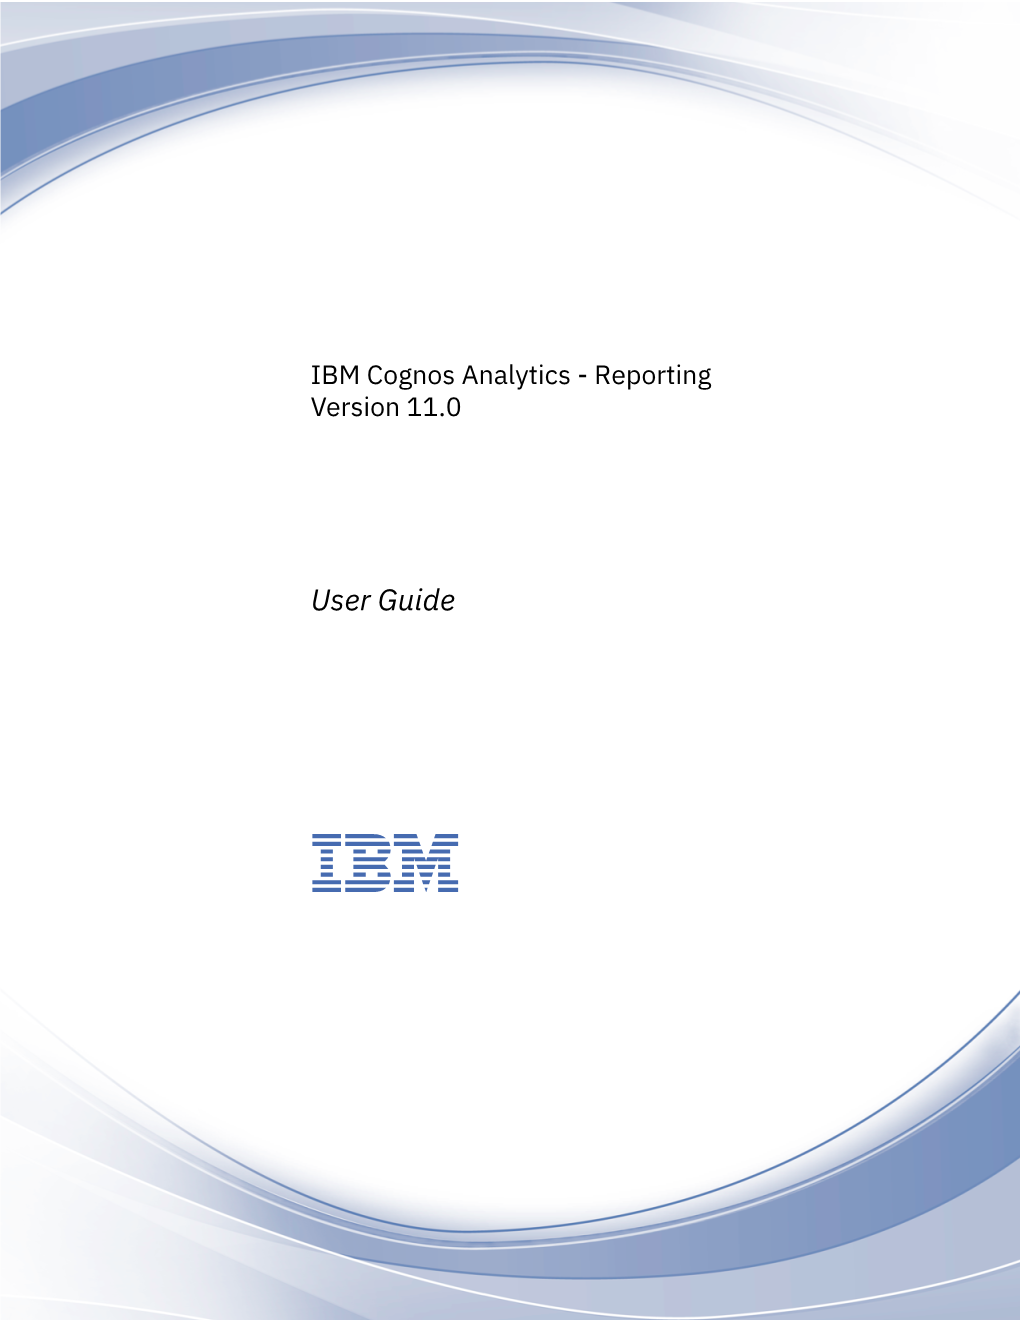 IBM Cognos Analytics - Reporting Version 11.0